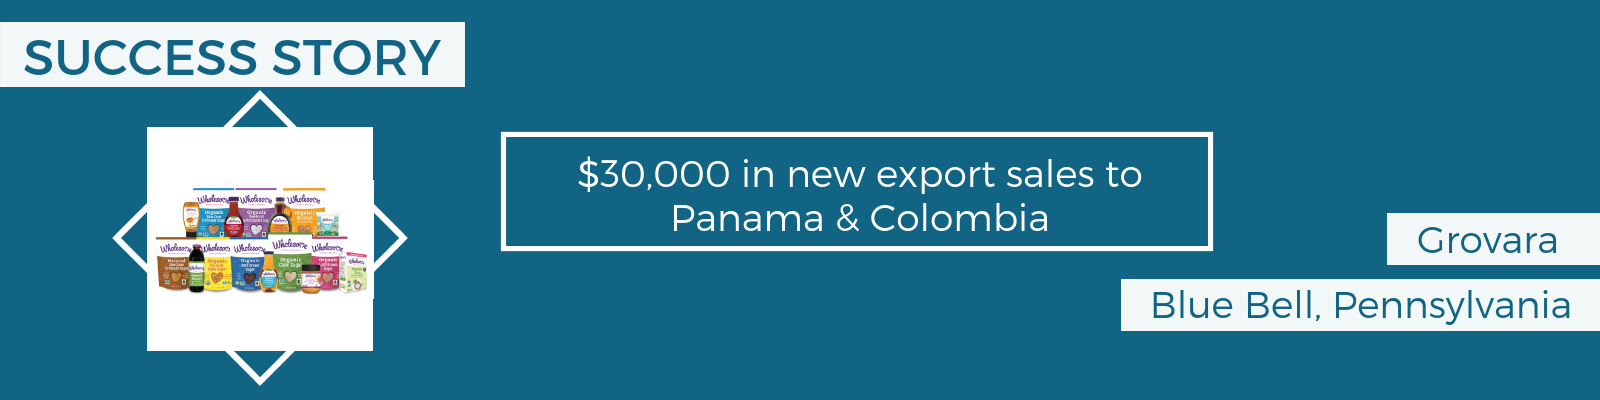 Panama Success Story 1